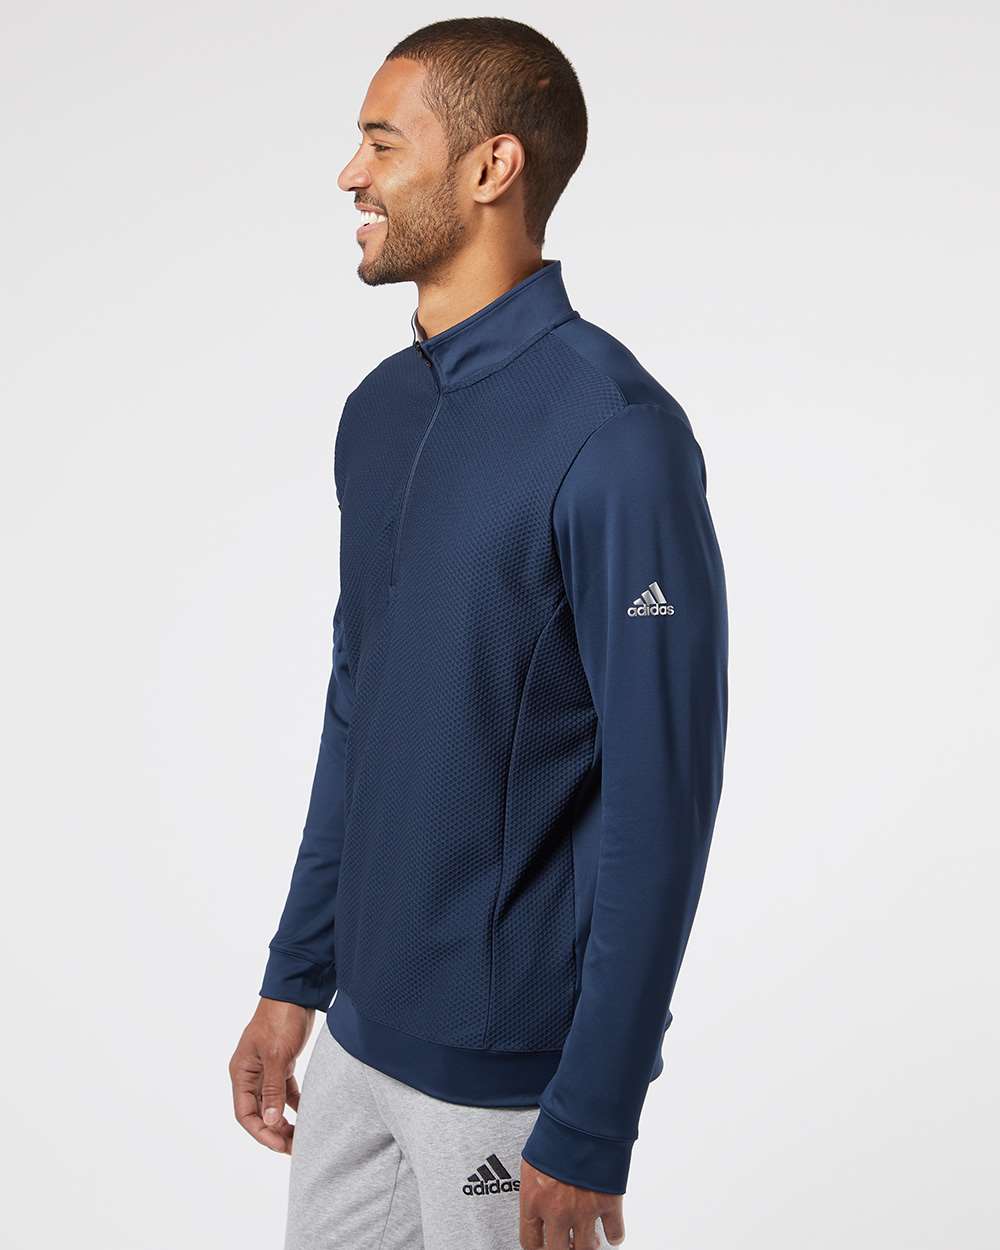 Adidas - Performance Textured Quarter-Zip Pullover - A295